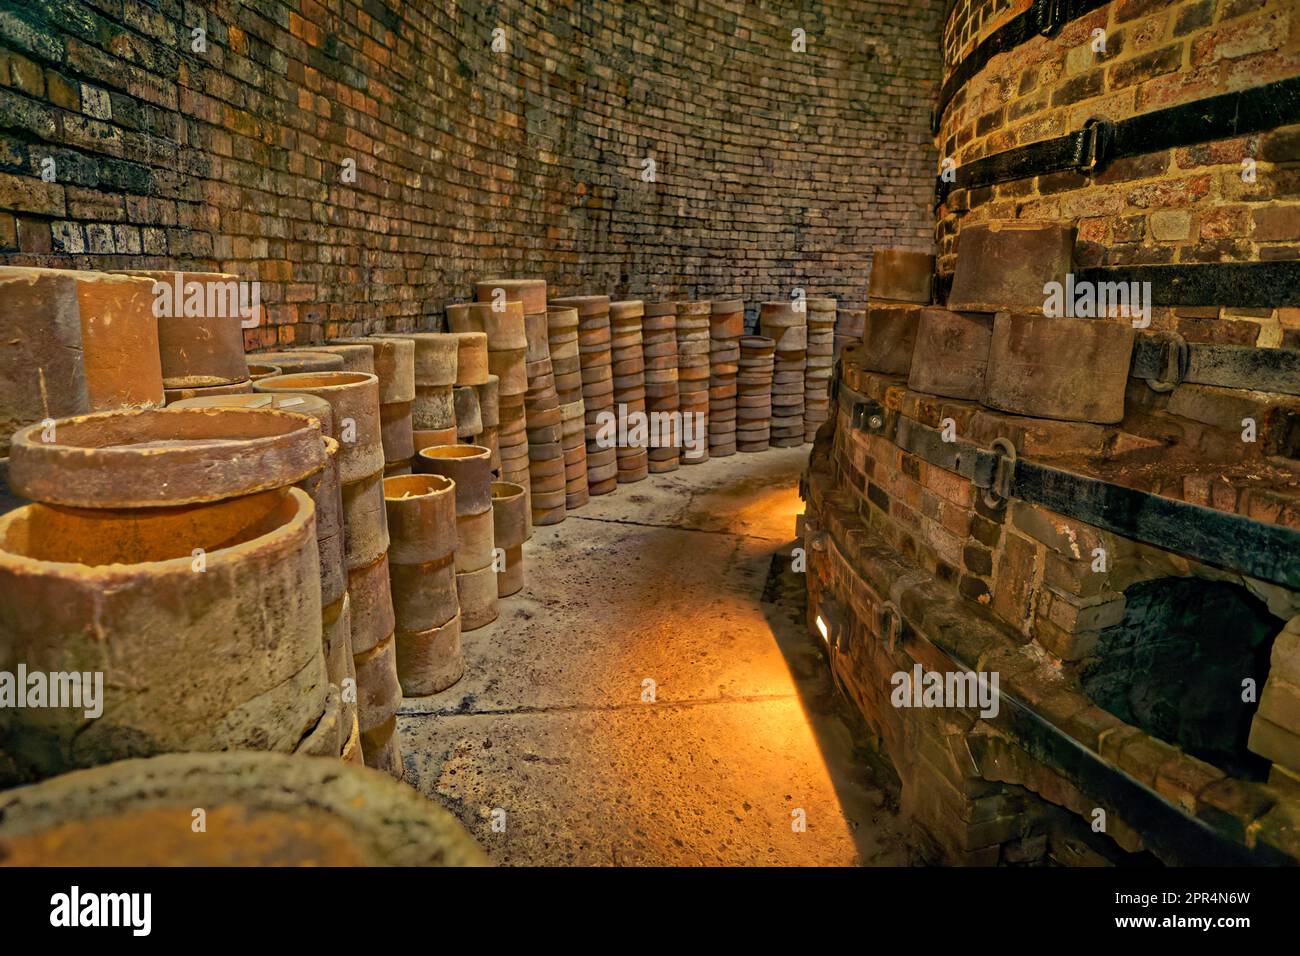 Interior of Stoke-on-Trent Bottle kilns at Gladstone Museum, Longton. Stoke-on-Trent, England. Stock Photo